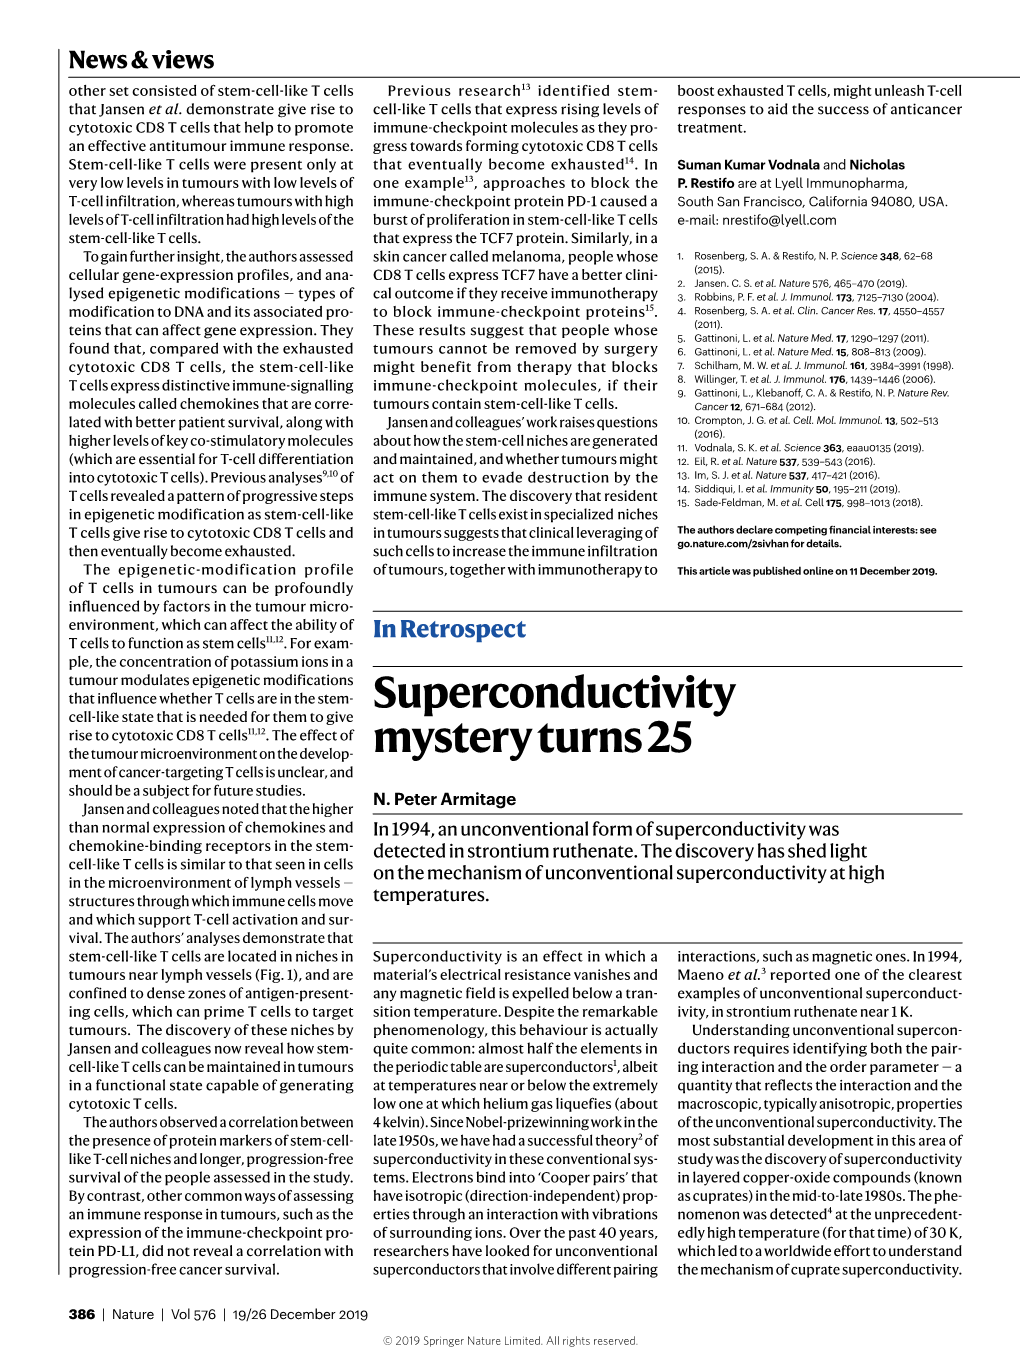 Superconductivity Mystery Turns 25